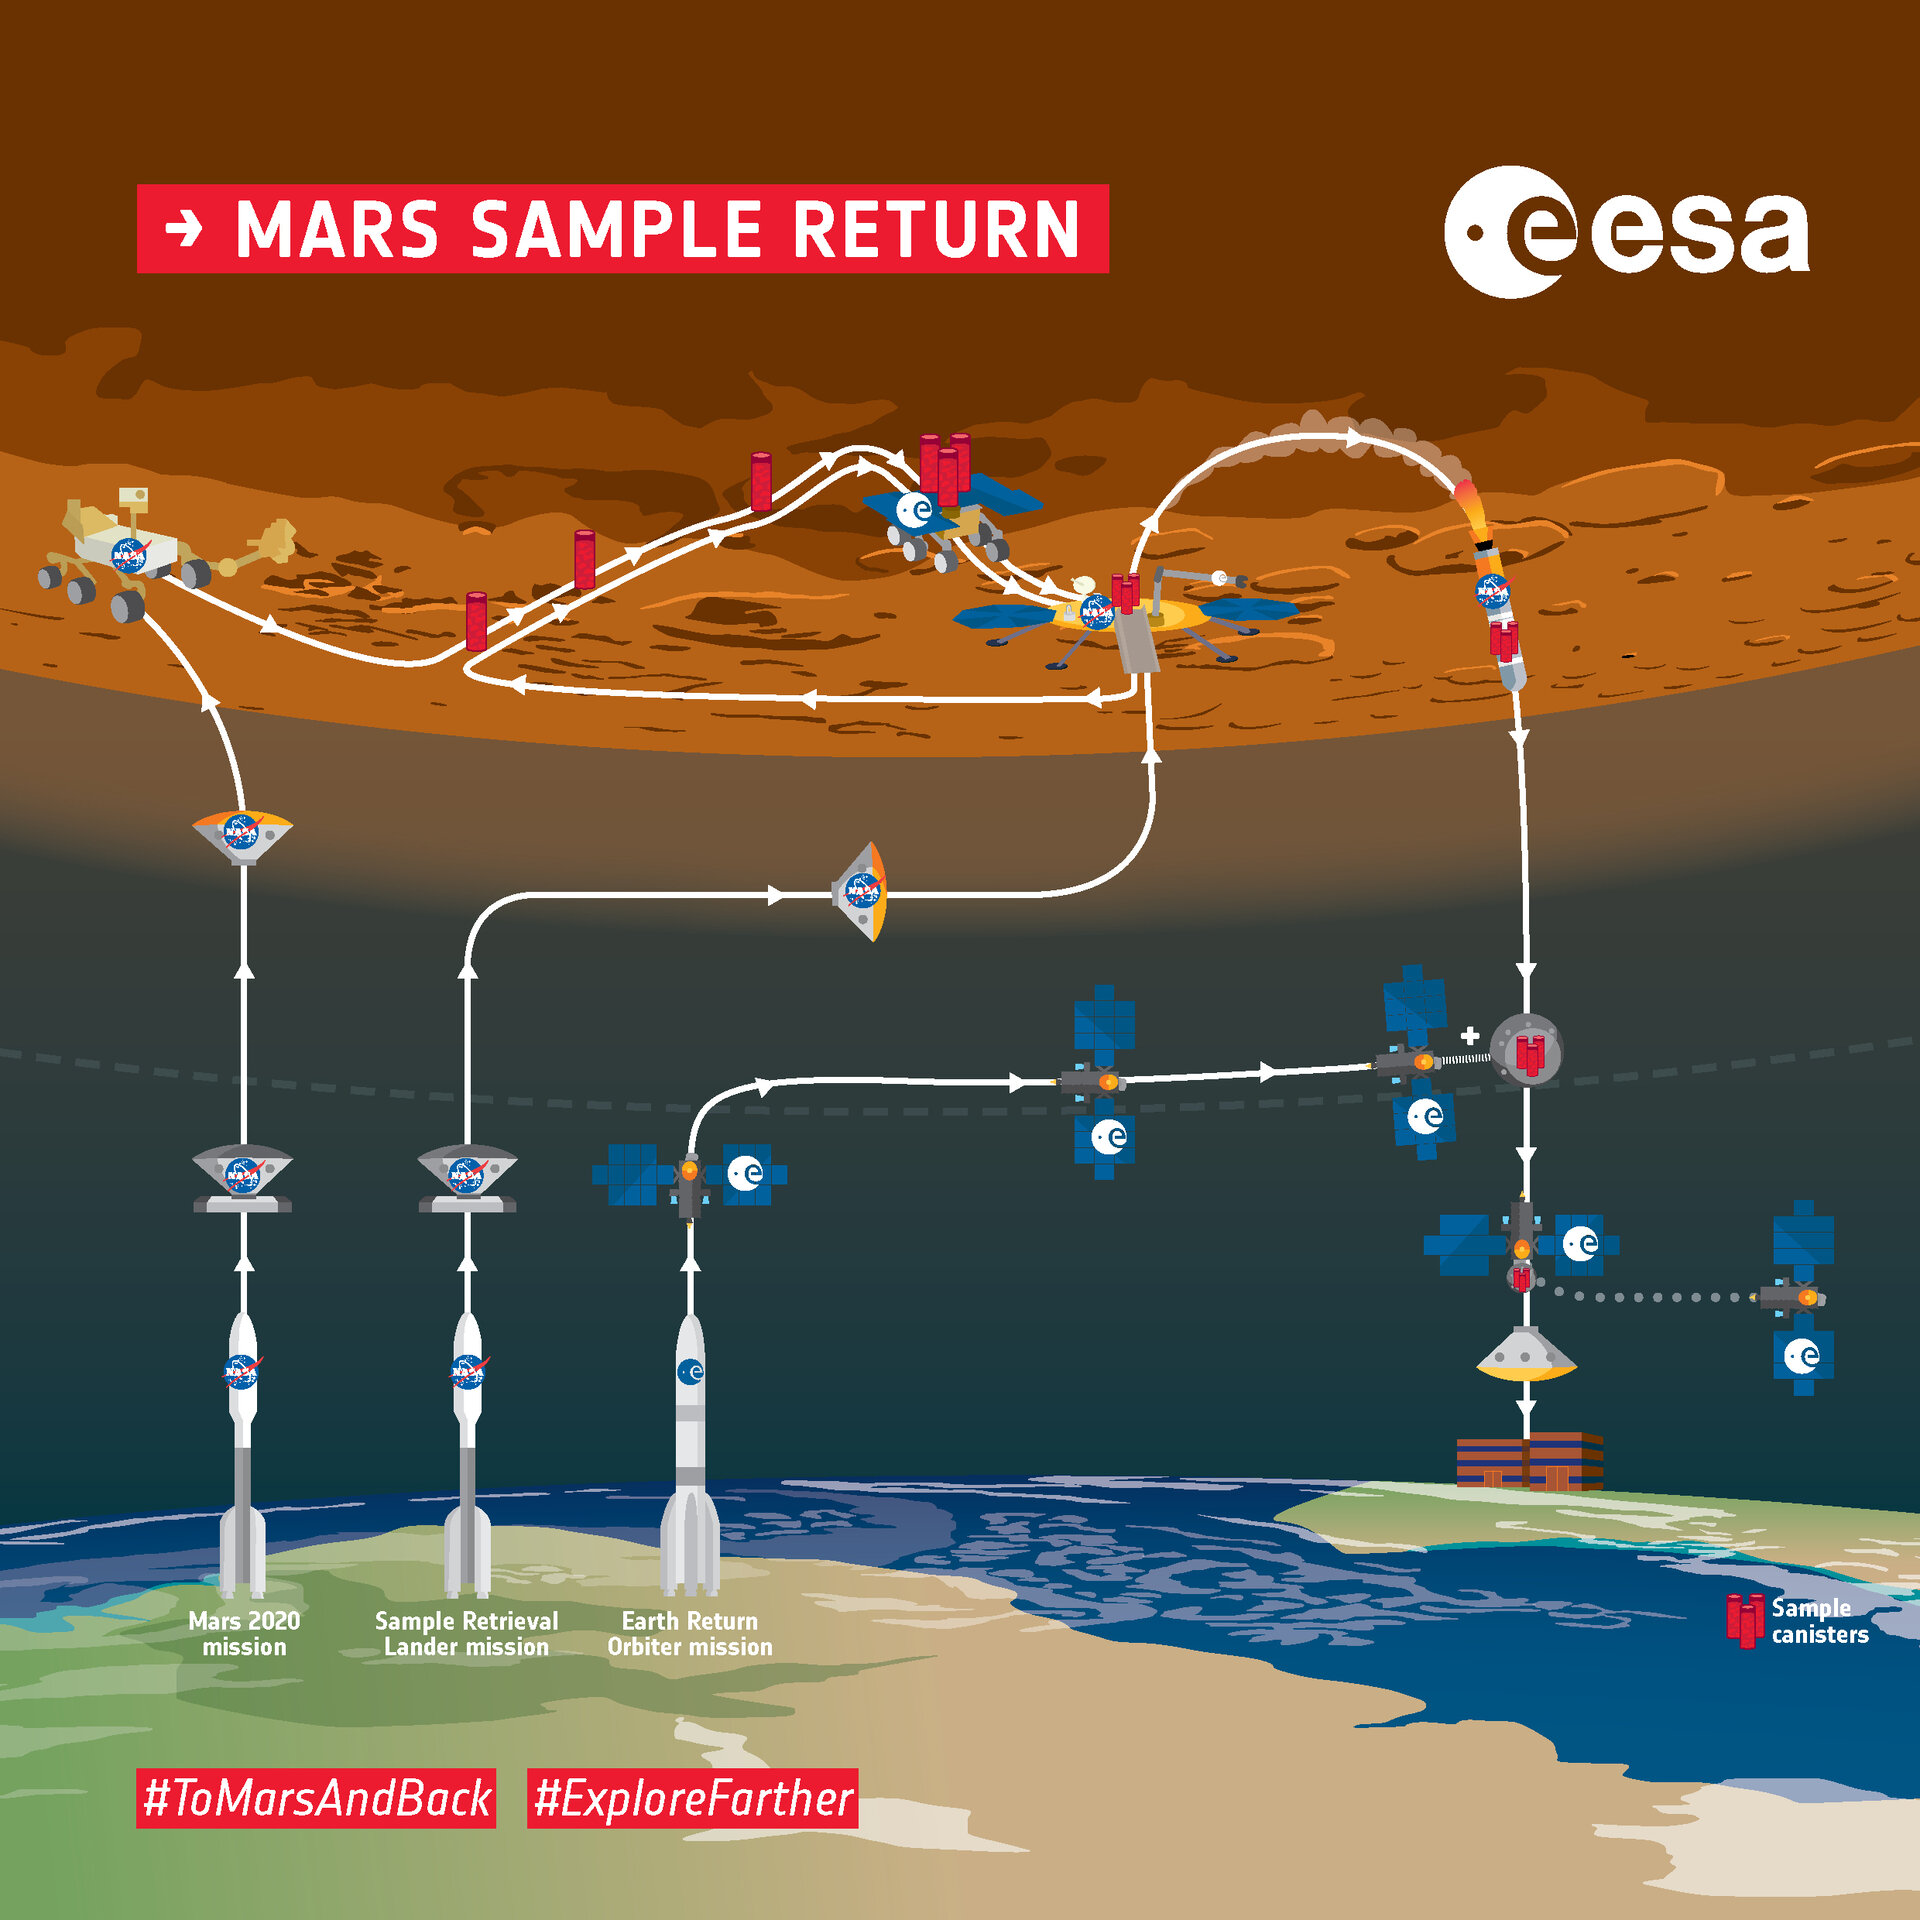 ESA - Mars Sample Return overview infographic